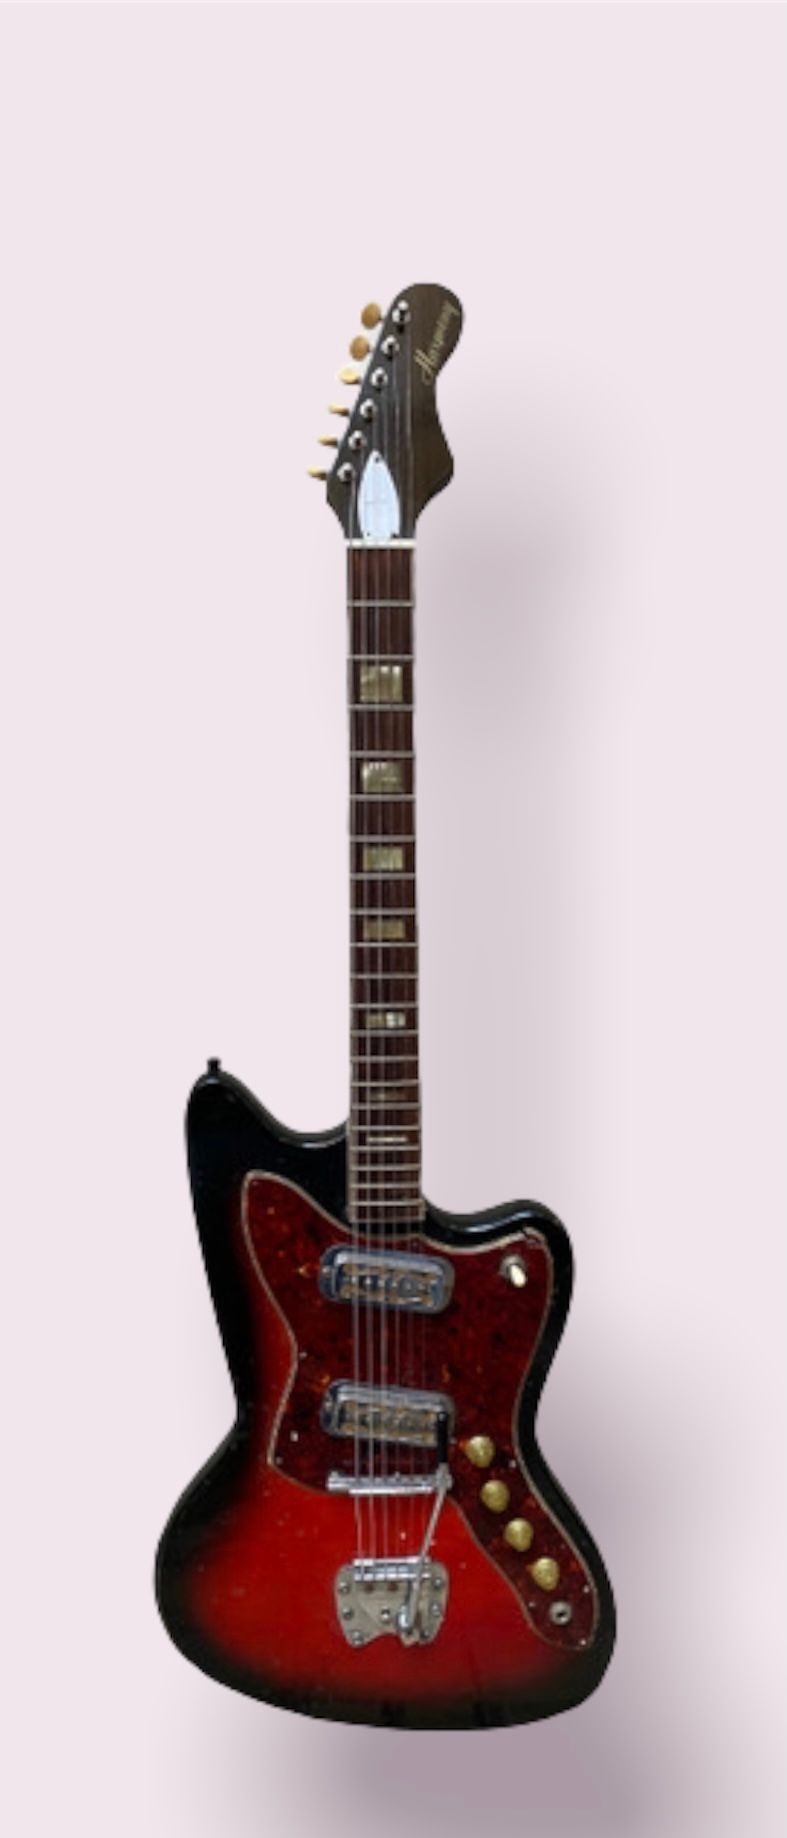 Null * 电吉他，HARMONY Silhouette/Bobcat H19，约1963/1968年

黑樱桃爆裂

琴颈和指板：枫木琴颈涂有黑檀木指板

&hellip;